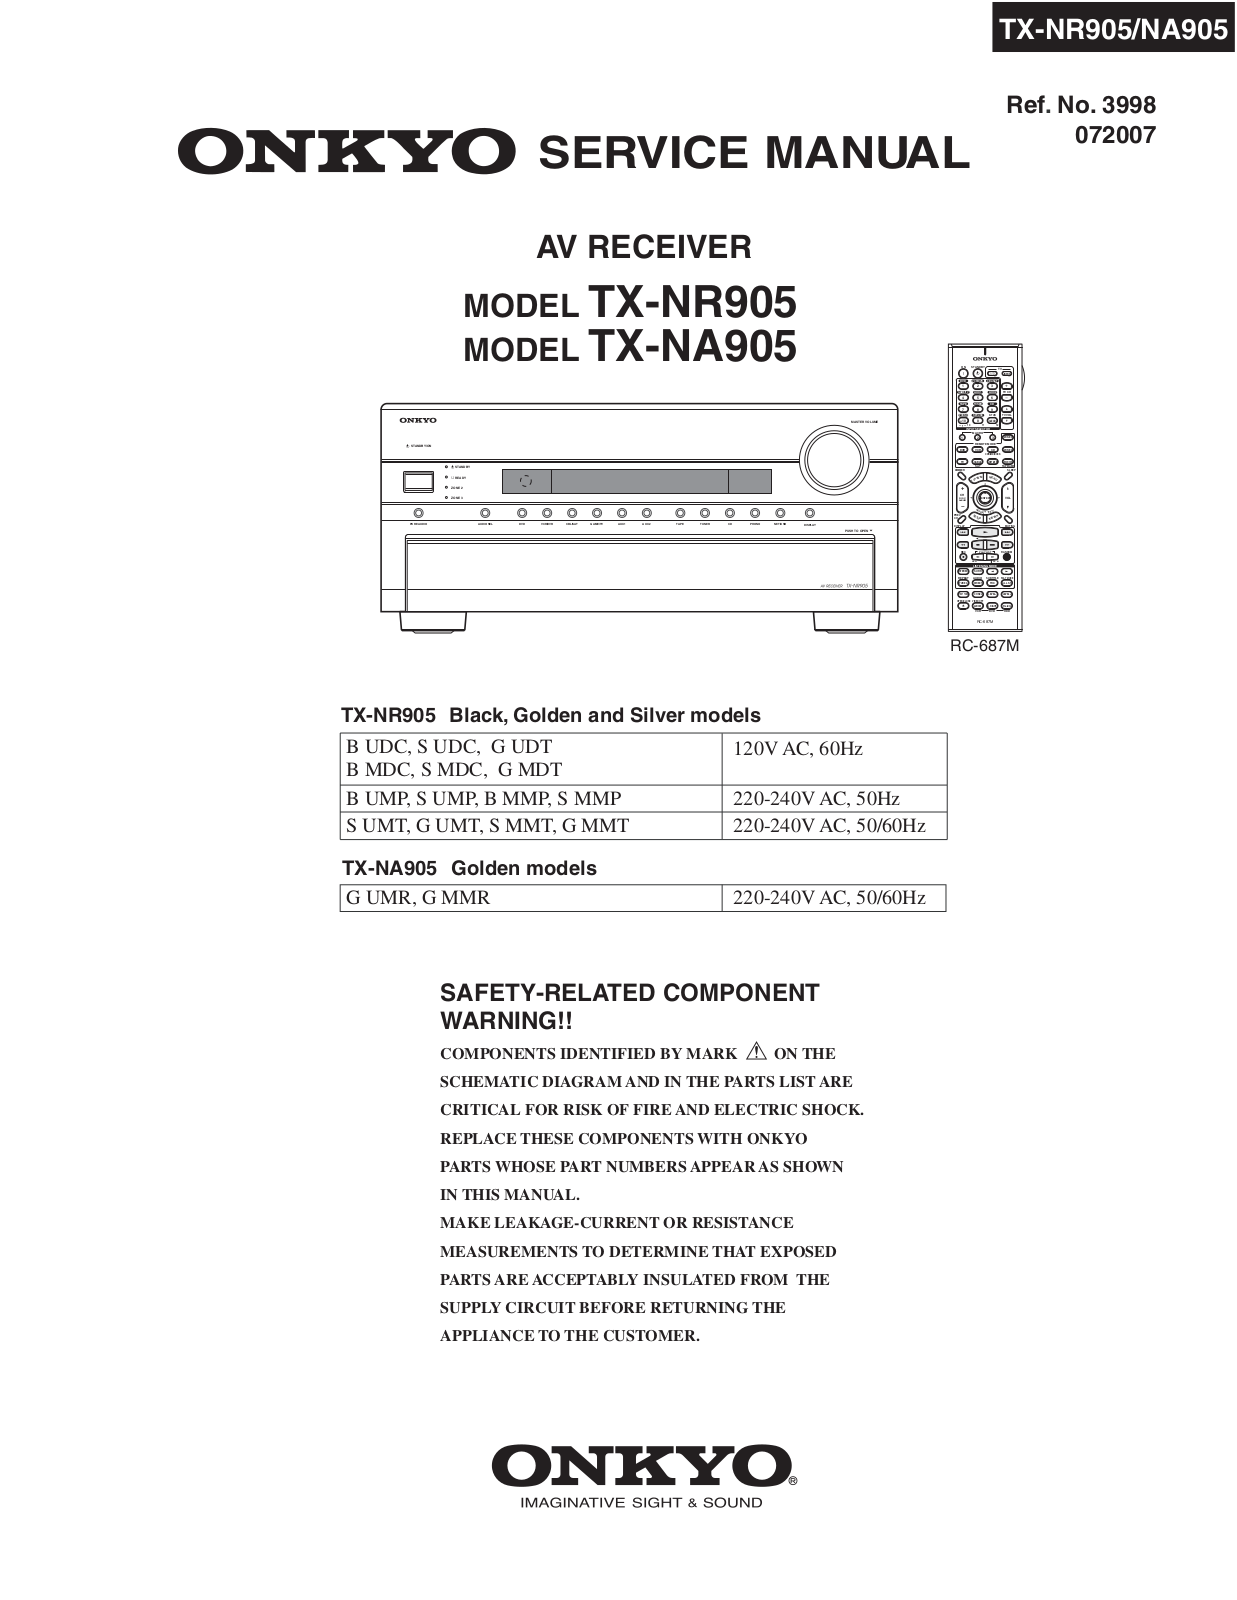 Onkyo TX-NA905, TX-NR905 Service manual